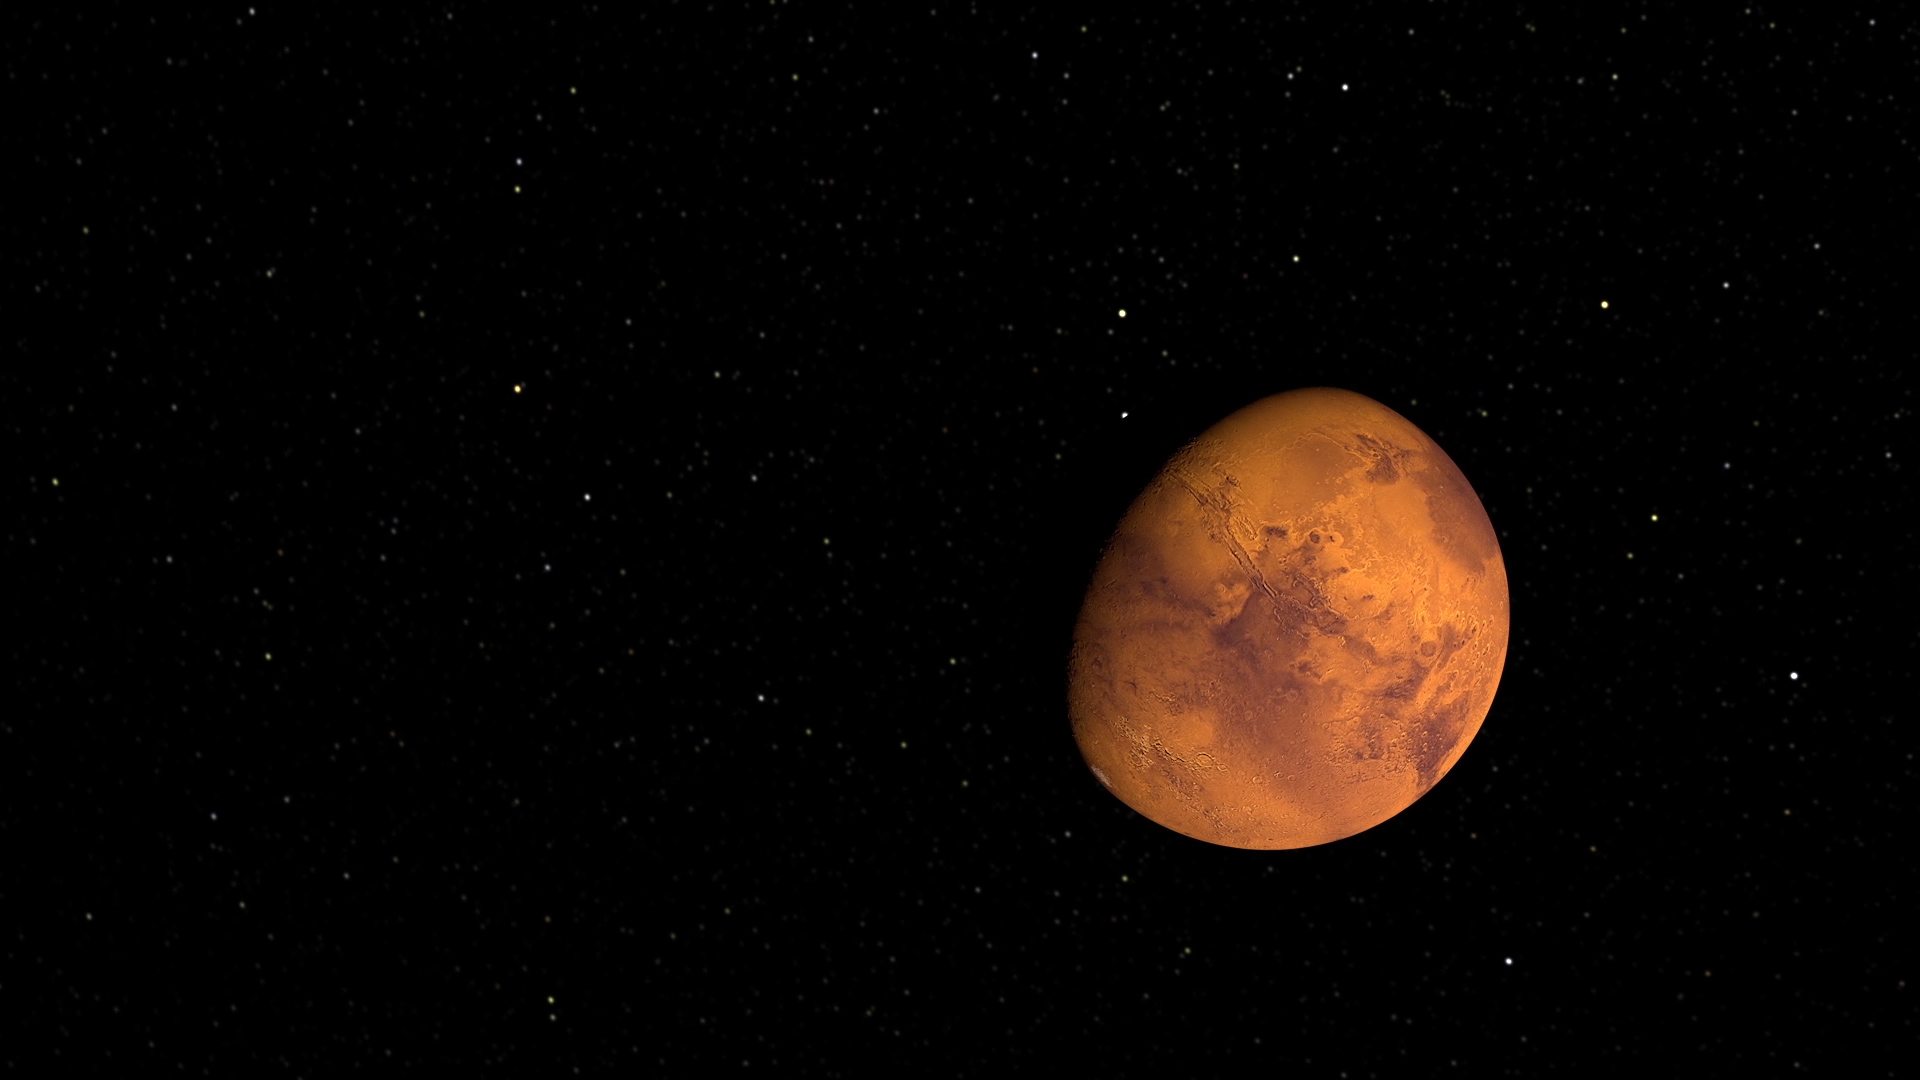 Bρέθηκαν τεράστια αποθέματα νερού στον Άρη: «Ο πλανήτης είναι άμεσα αποικίσιμος» λέει η NASA!